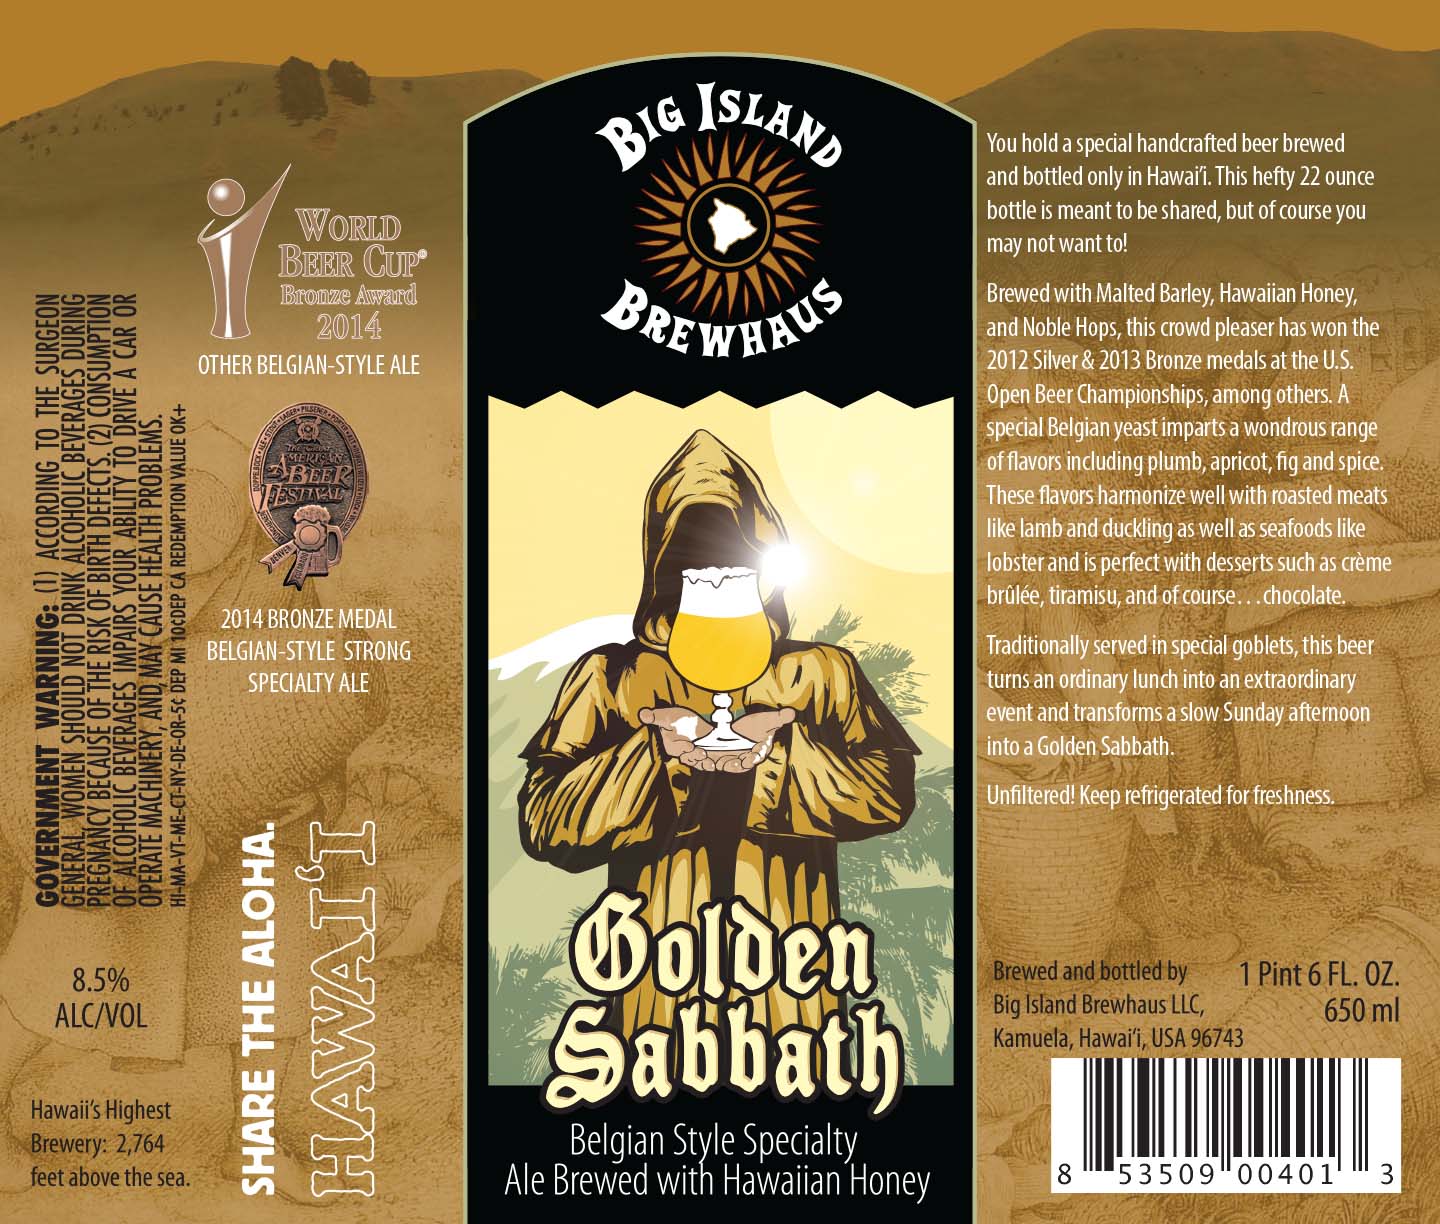 Big-Island-Brewhaus-Golden-Sabbath-full-label-by-vapordave